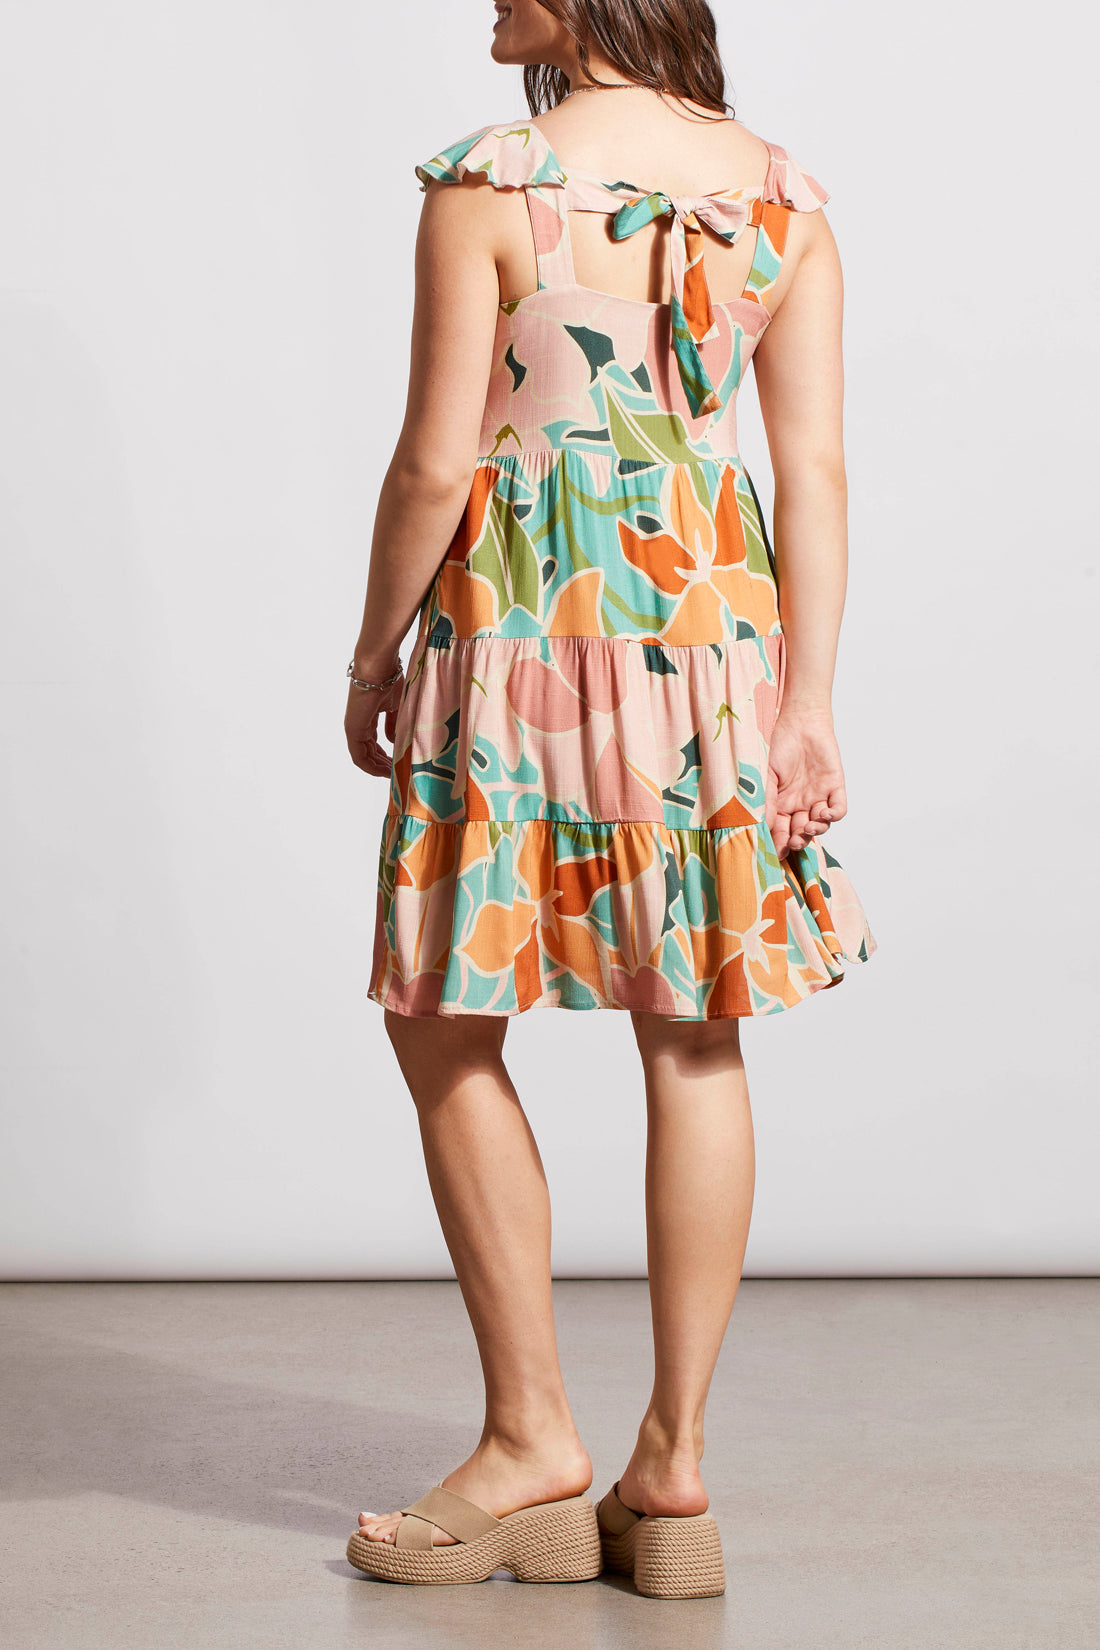 Tribal Chloe Sleeveless Dress - Apricot Tan Clothing - Dresses + Jumpsuits - Dresses - Short Dresses by Tribal | Grace the Boutique